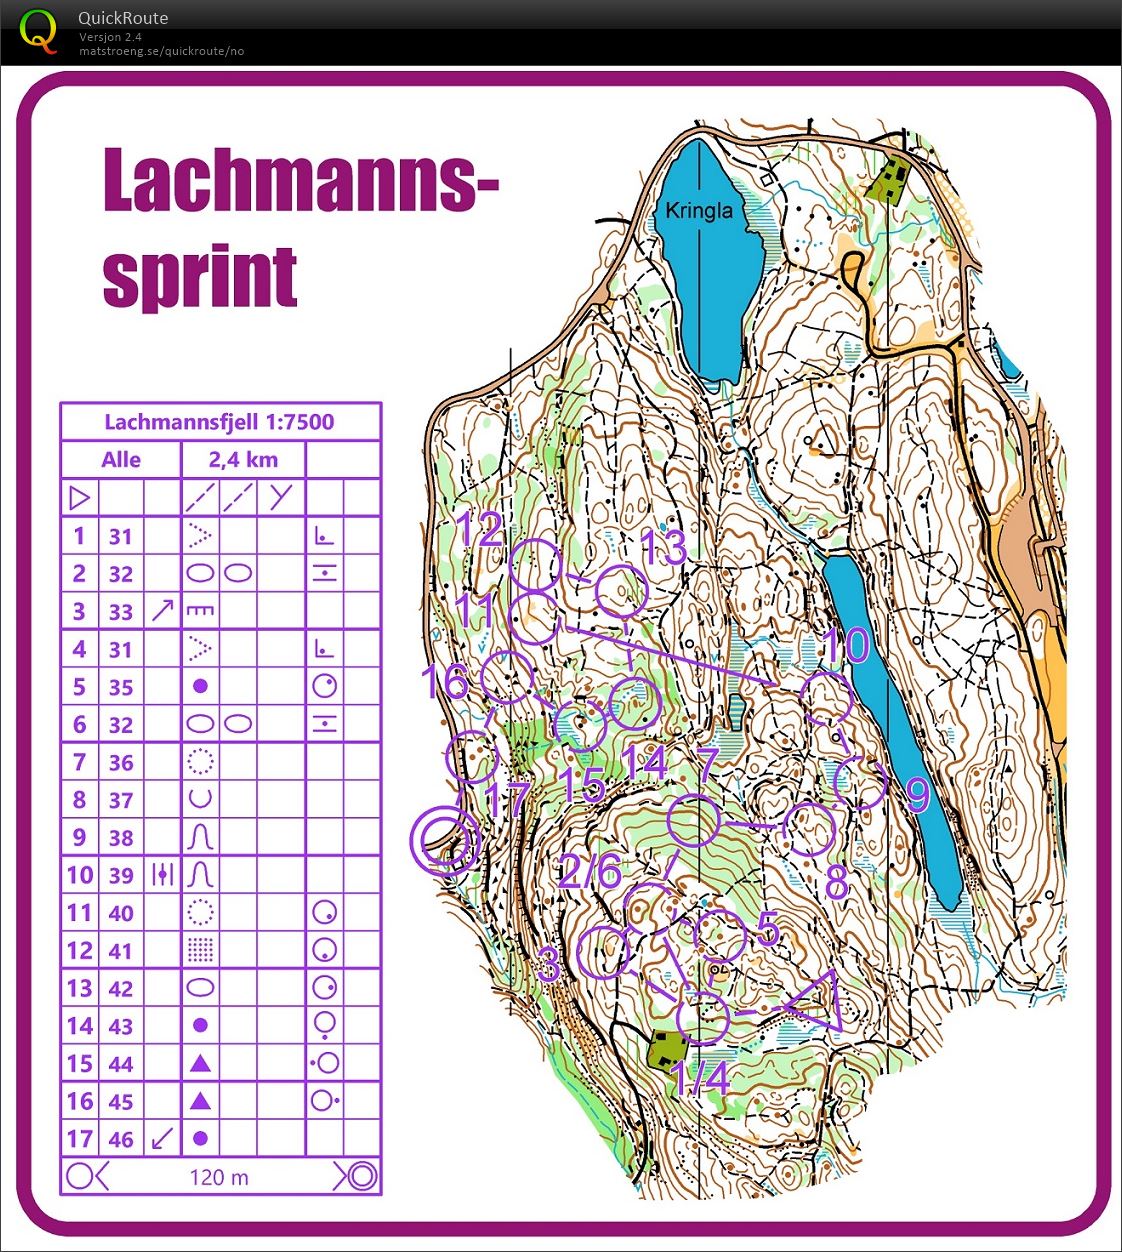 Lachmannssprint (25/02/2020)